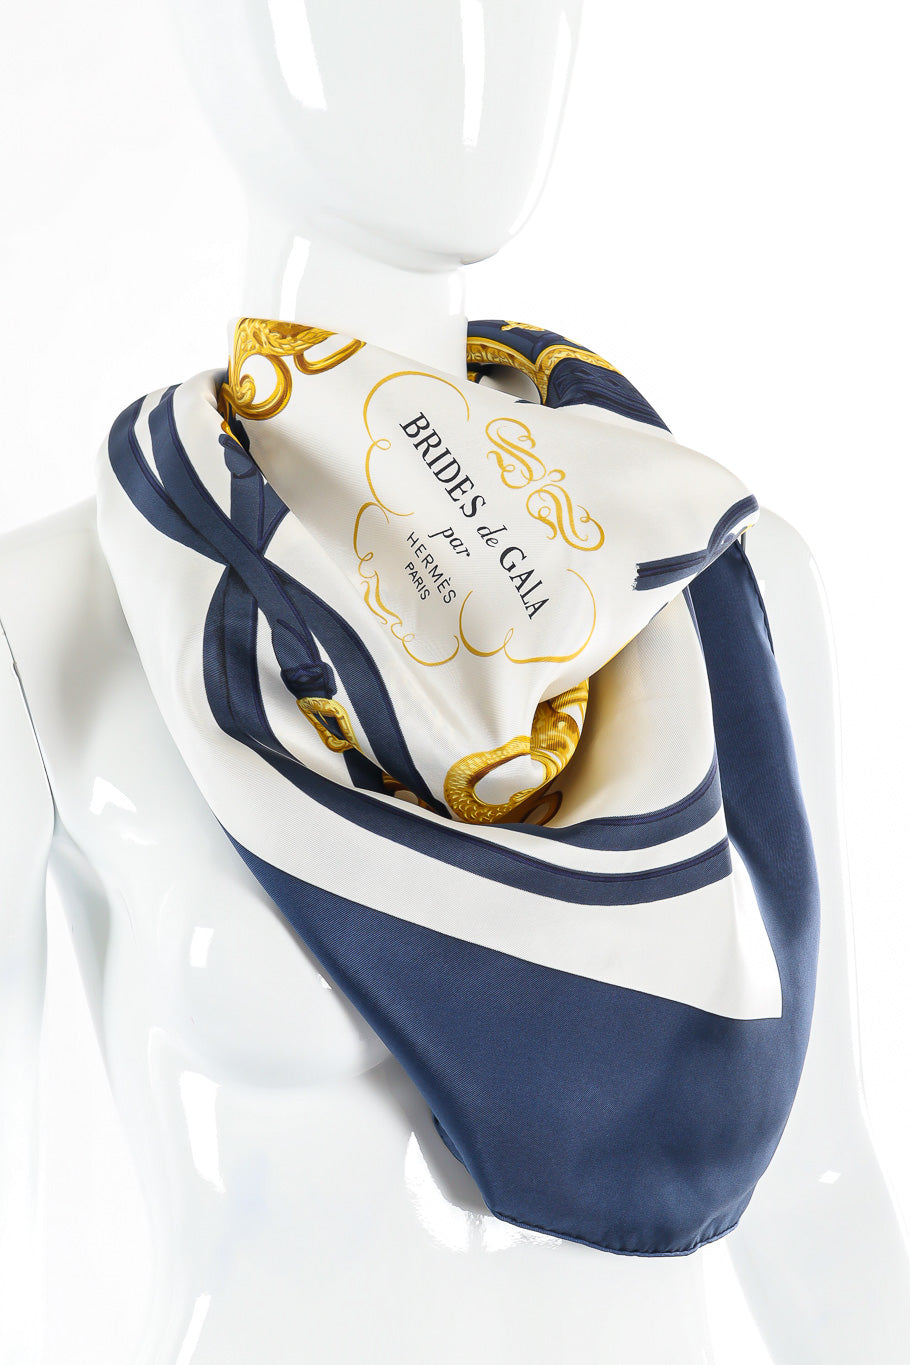 Brides de gala scarf by Hermes Photo on Mannequin. @recessla